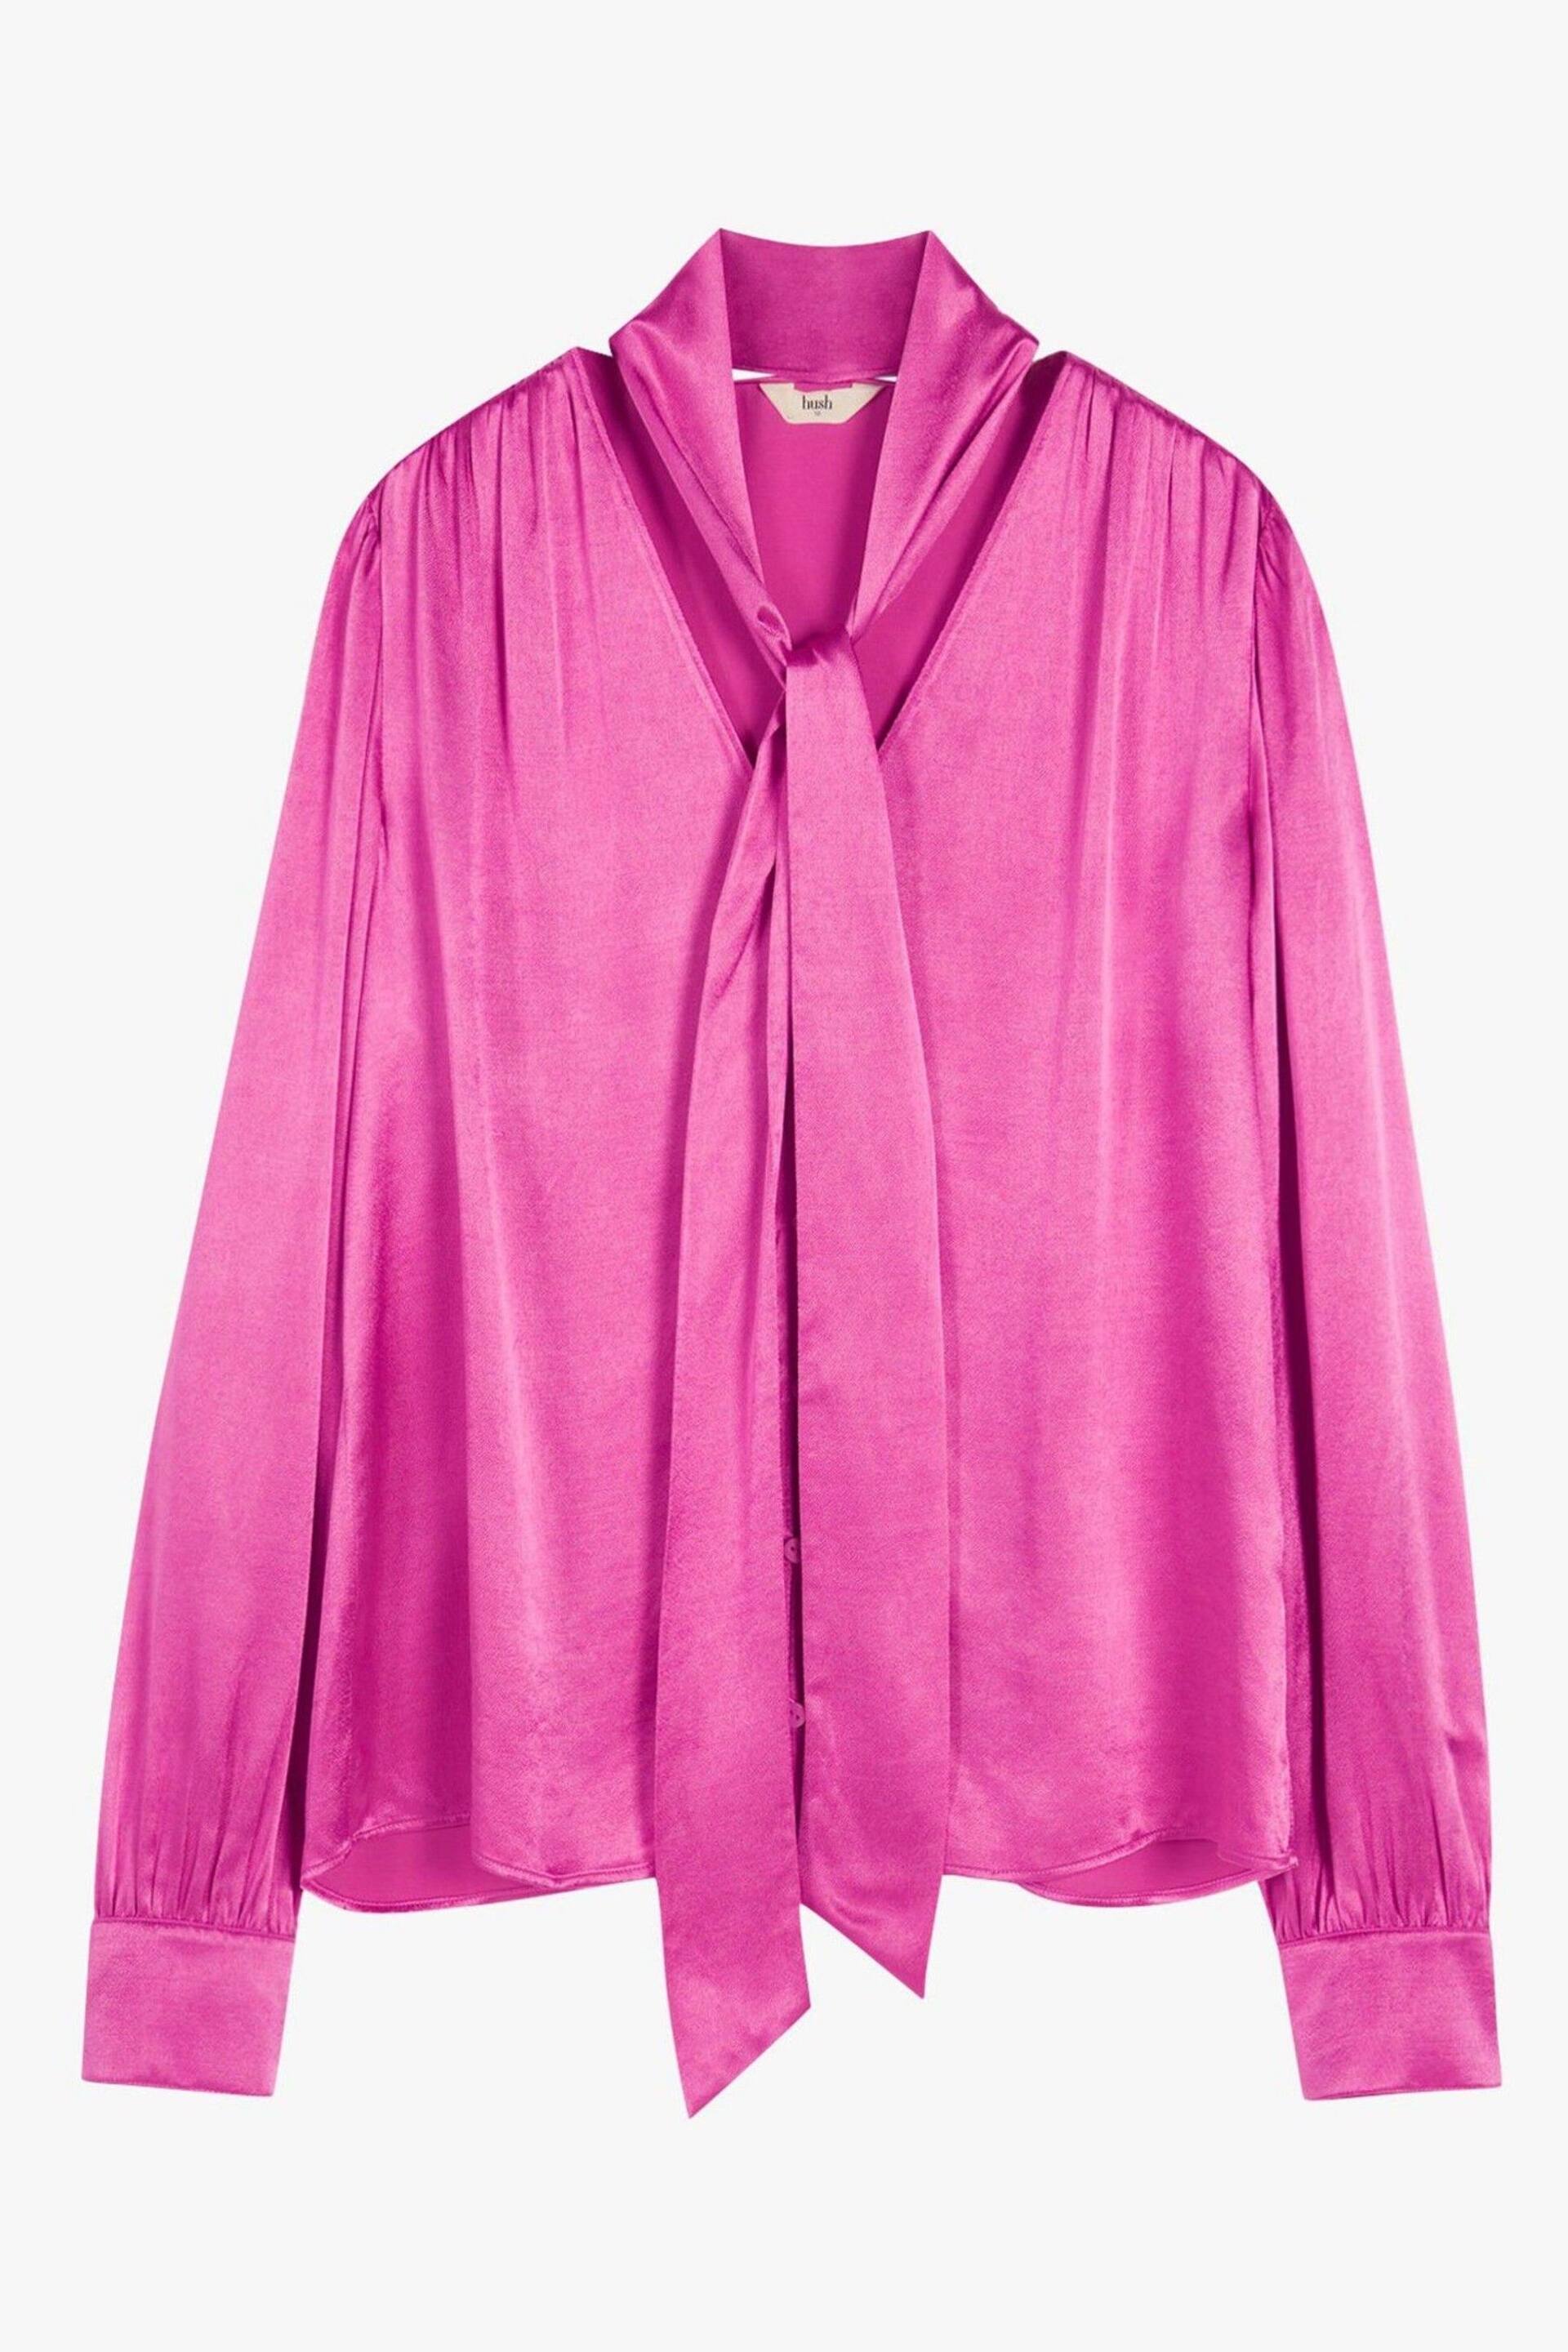 Hush Pink Priscilla Satin Tie Blouse - Image 5 of 5